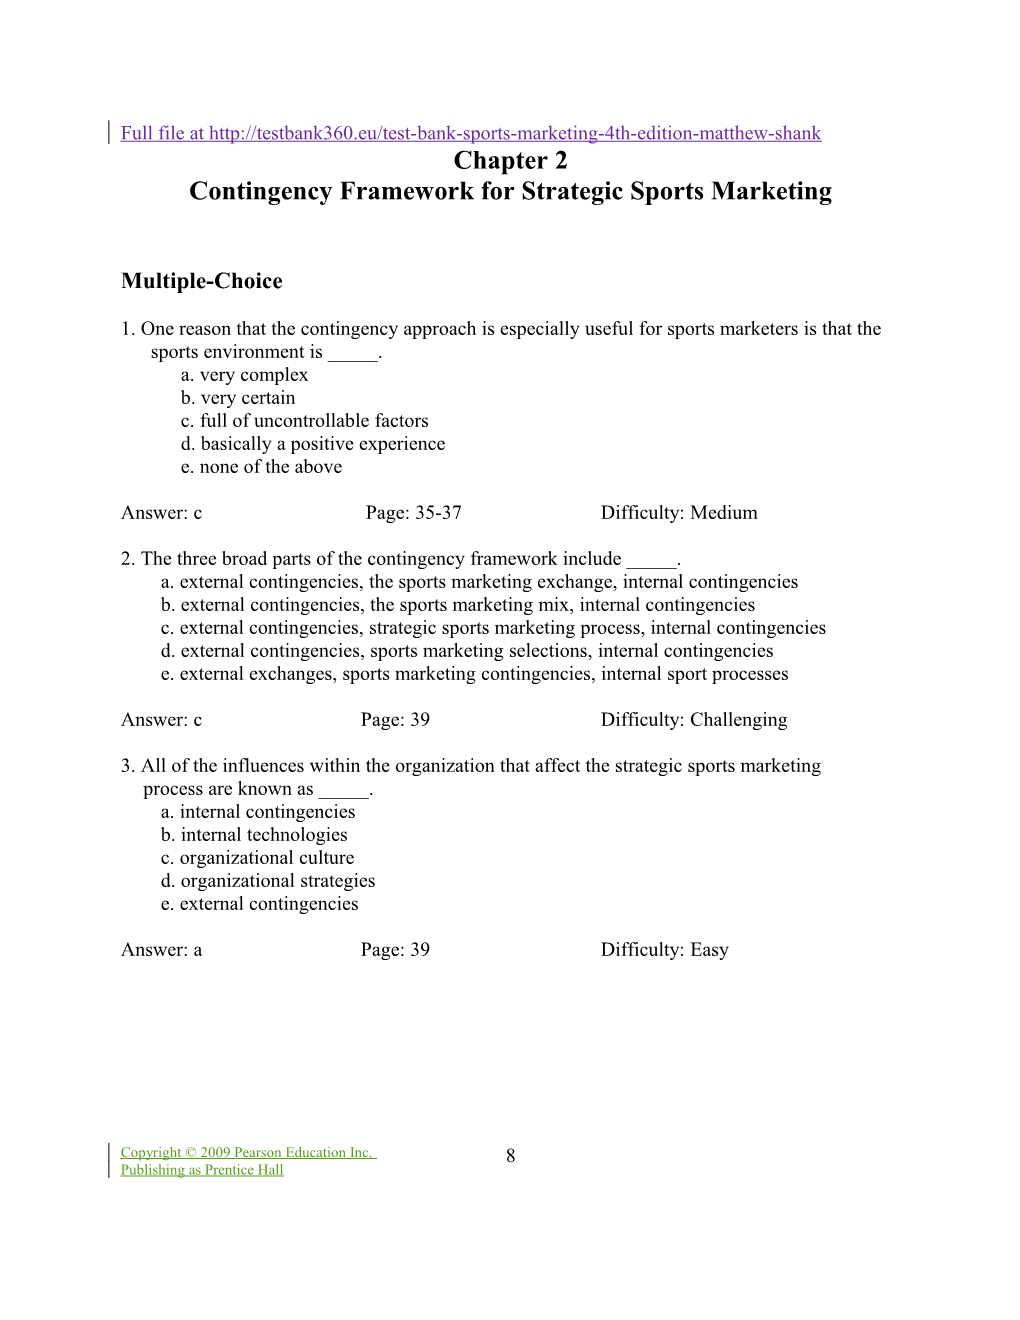 Contingency Framework for Strategic Sports Marketing